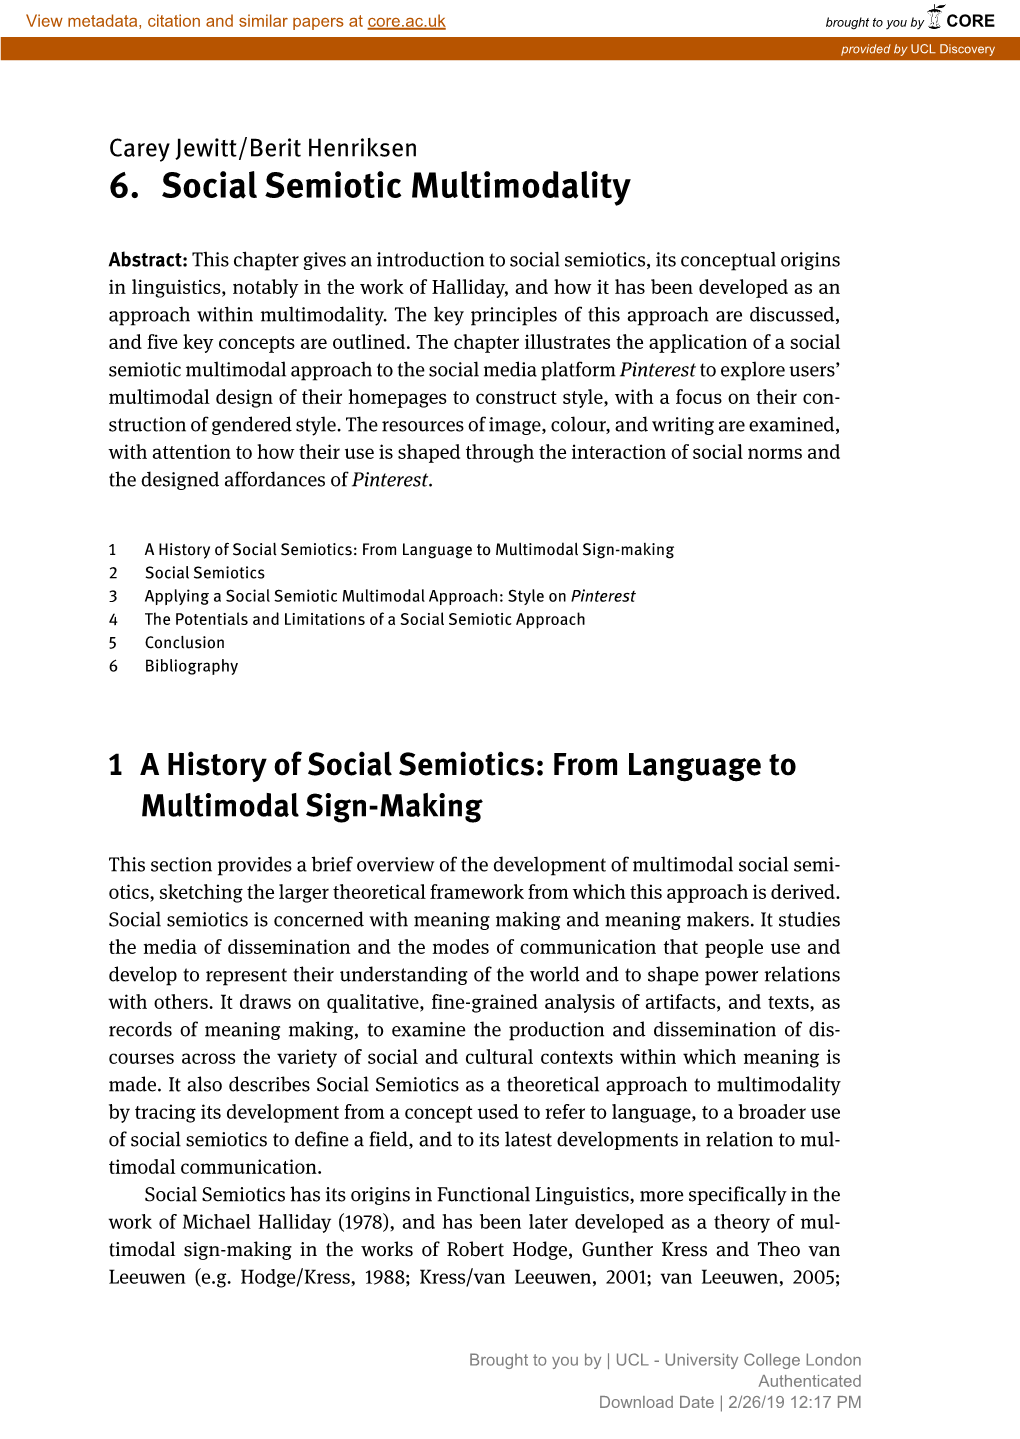 6. Social Semiotic Multimodality